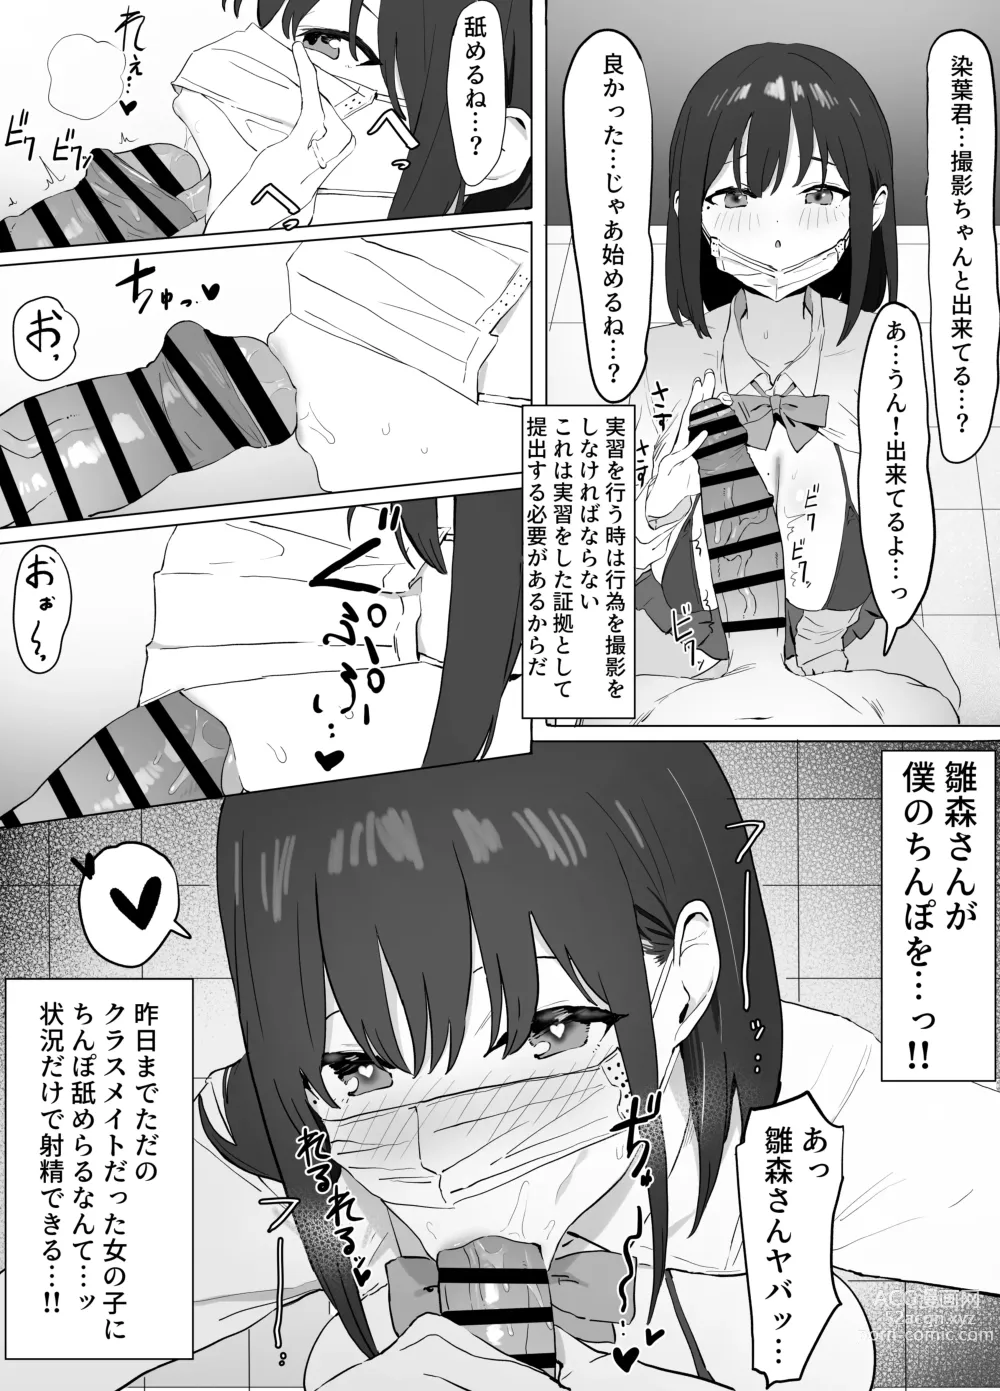 Page 9 of doujinshi Seikoui Jisshuu!